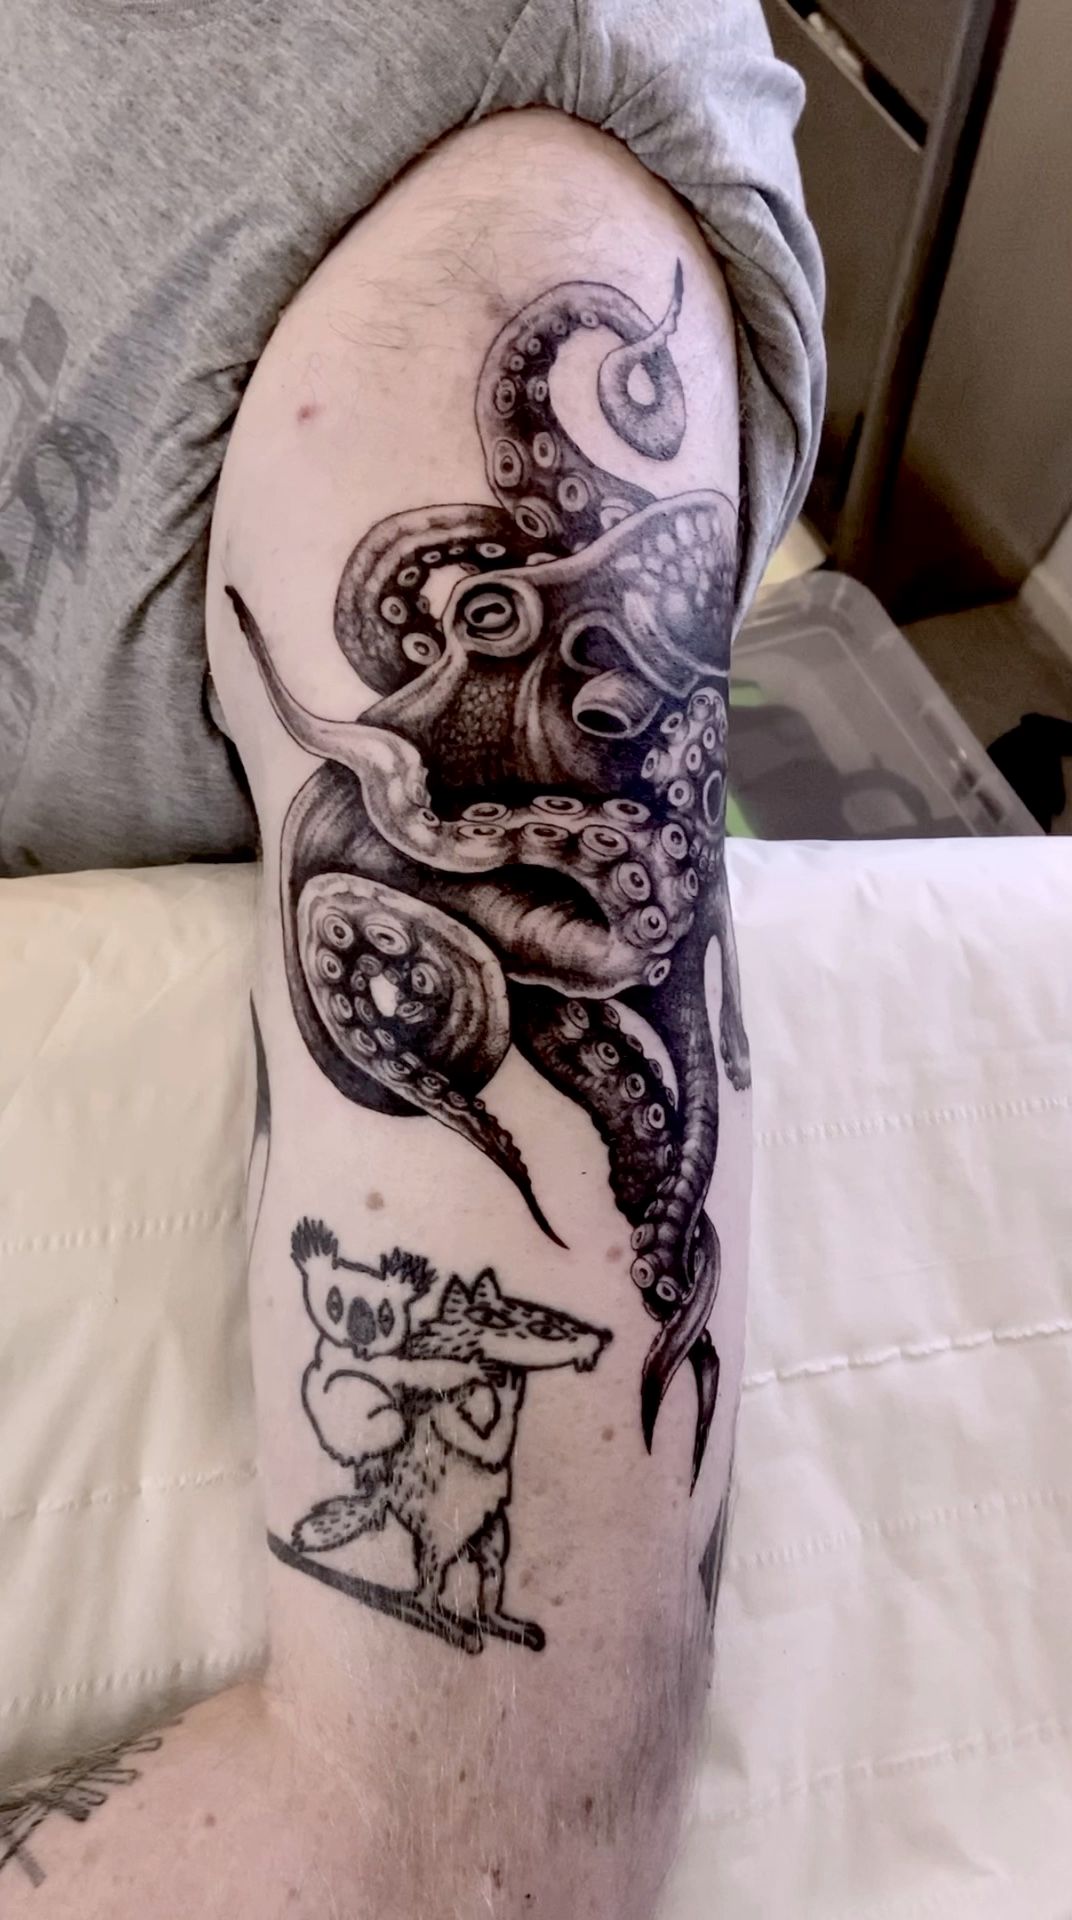 5 Octopus Tattoo Designs